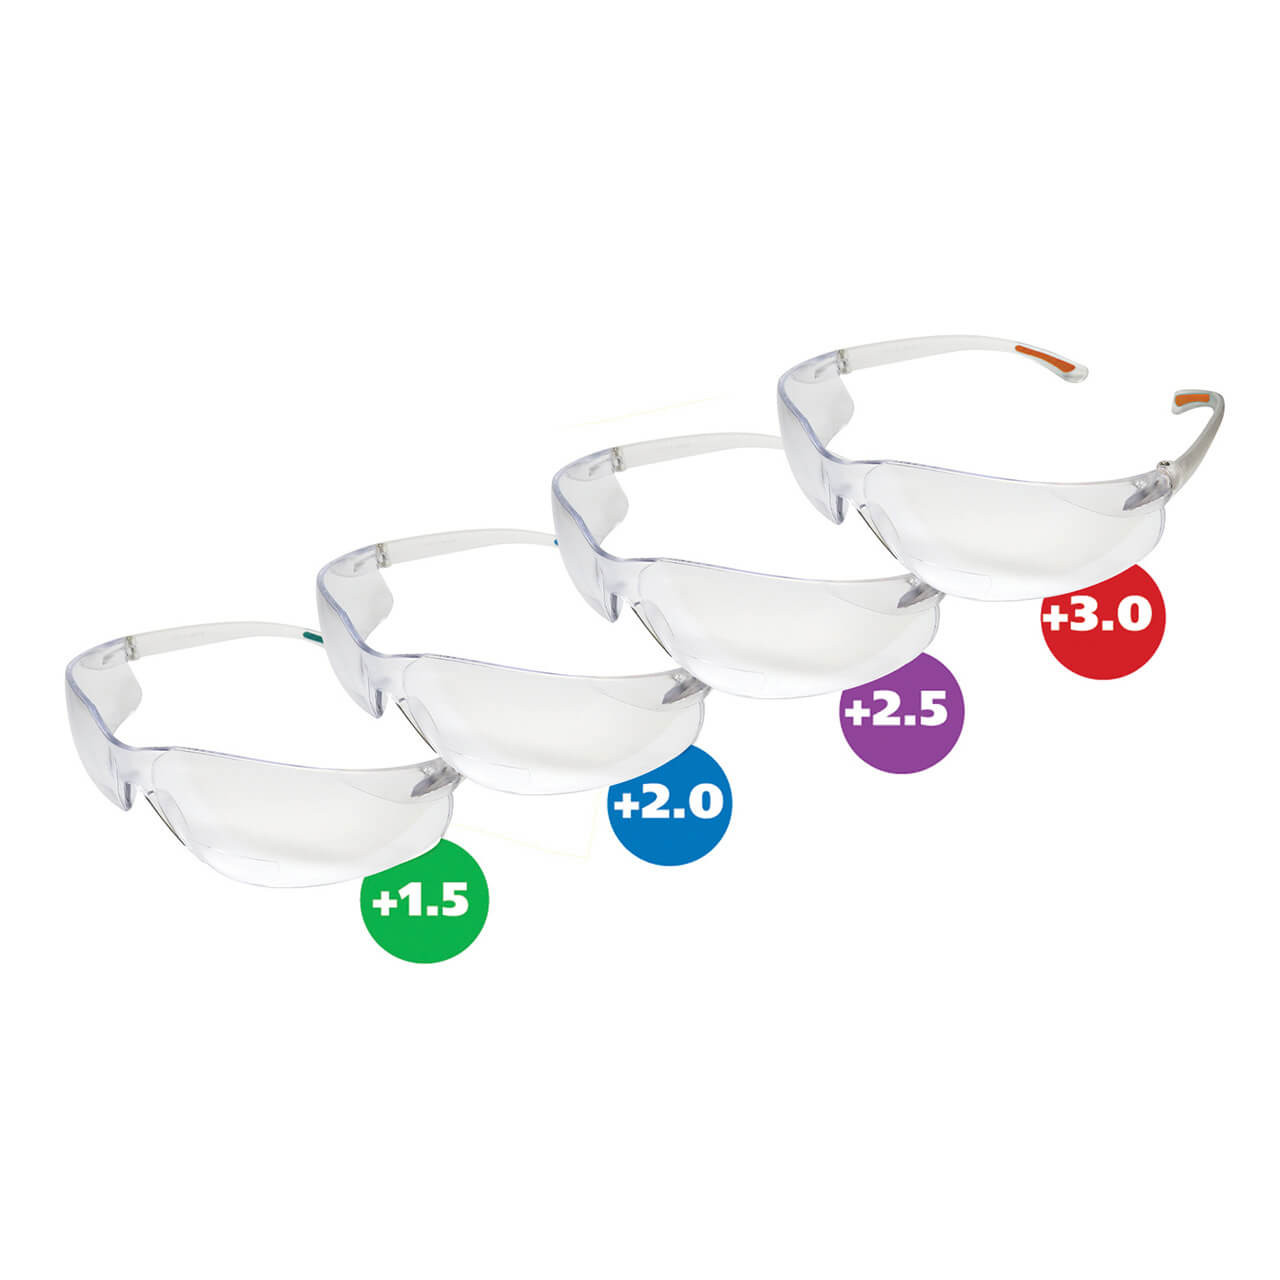 3.0 Bifocal Safety Glasses